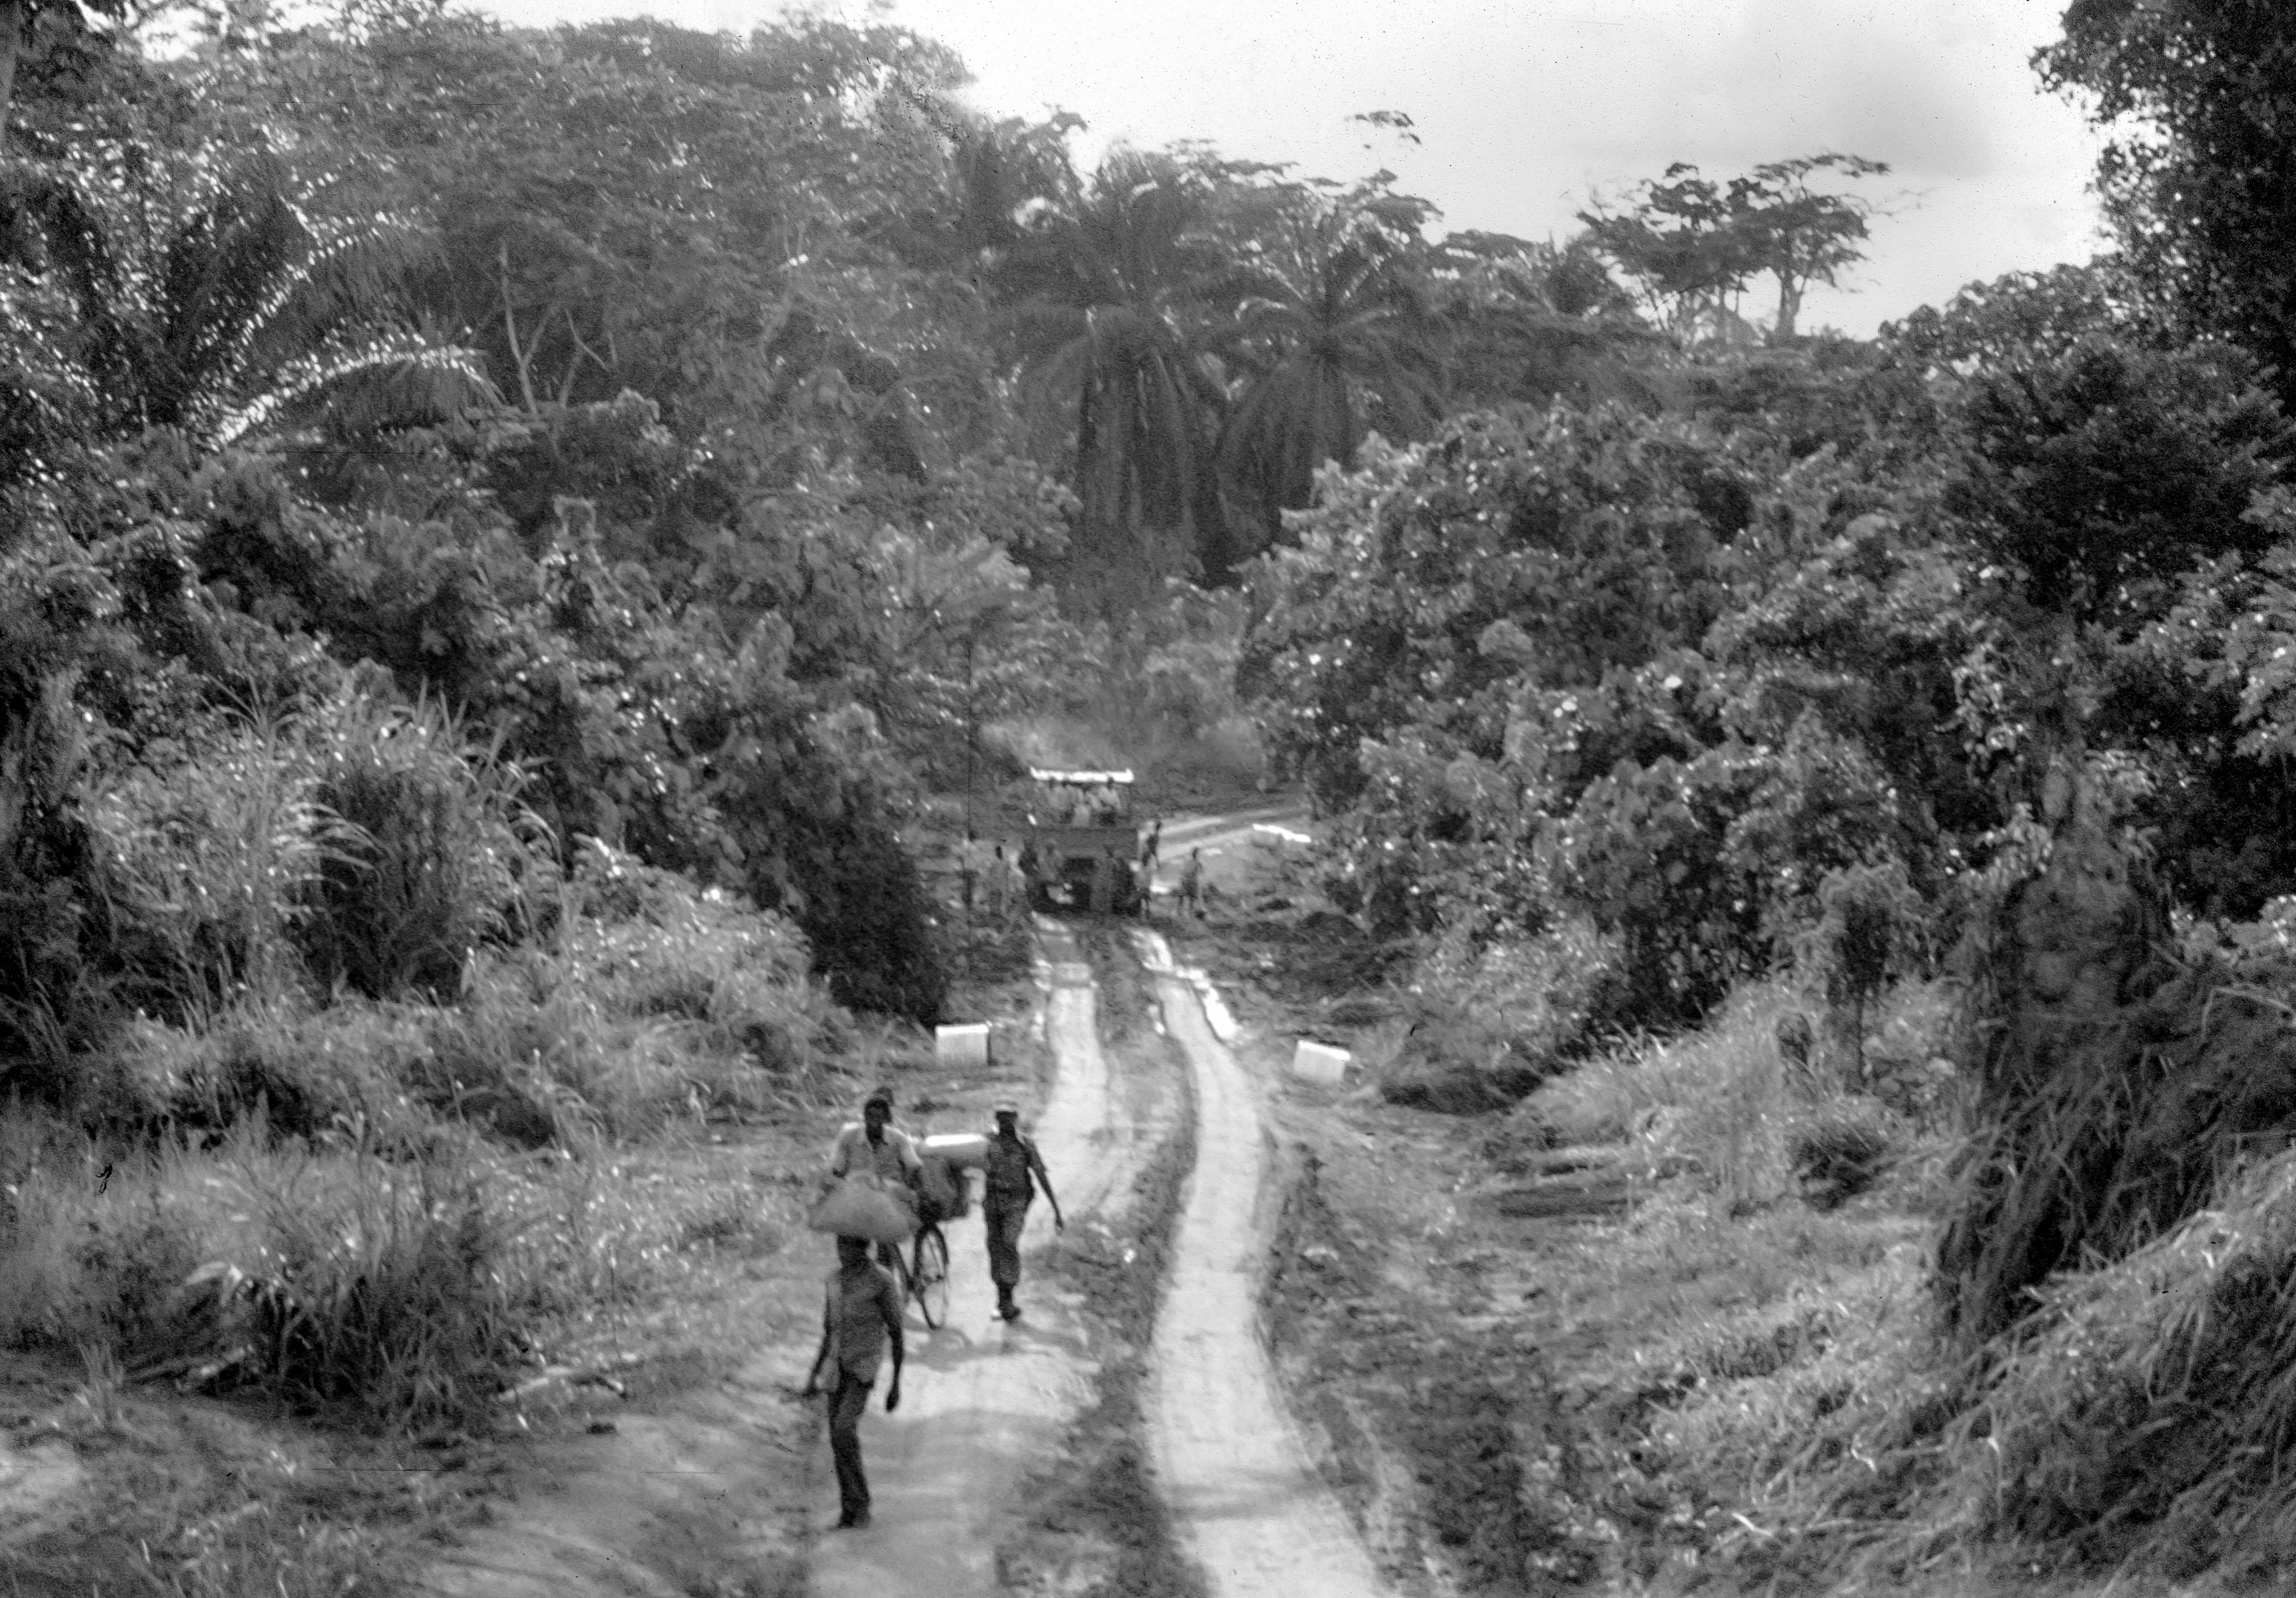 Congo Zaire, Muddy Road, 1984